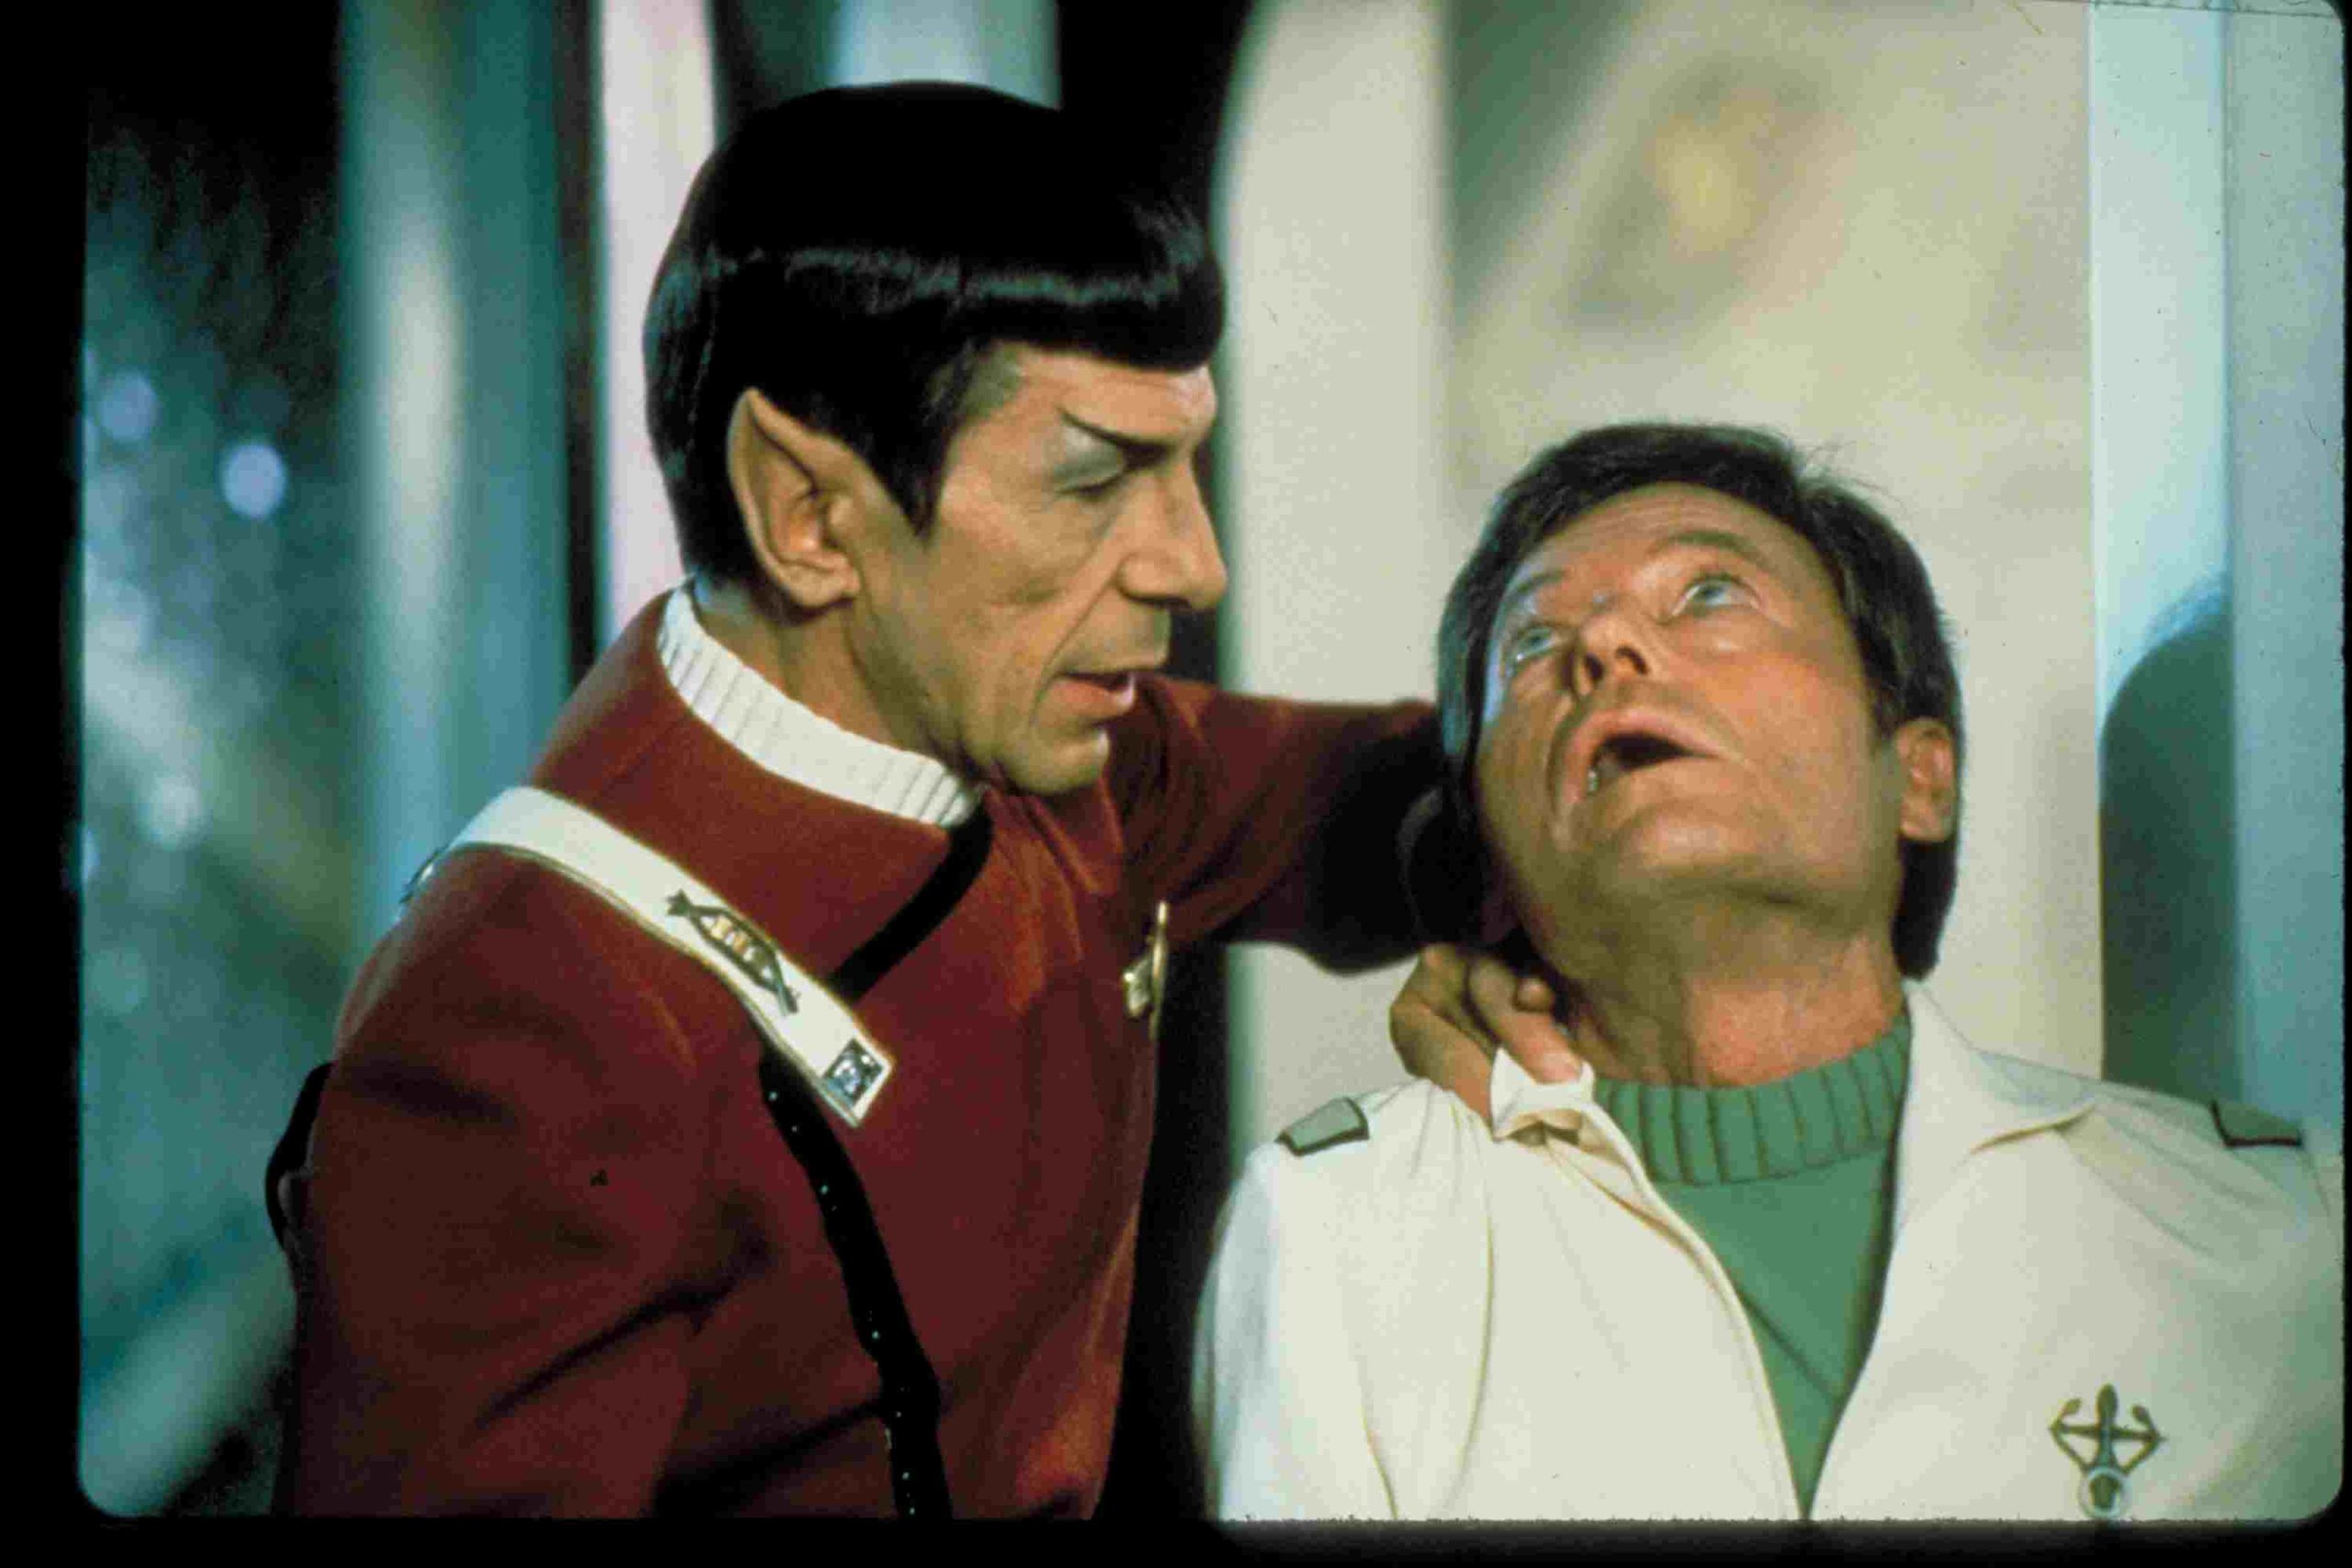 Star Trek II: The Wrath of Khan - 40th Anniversary